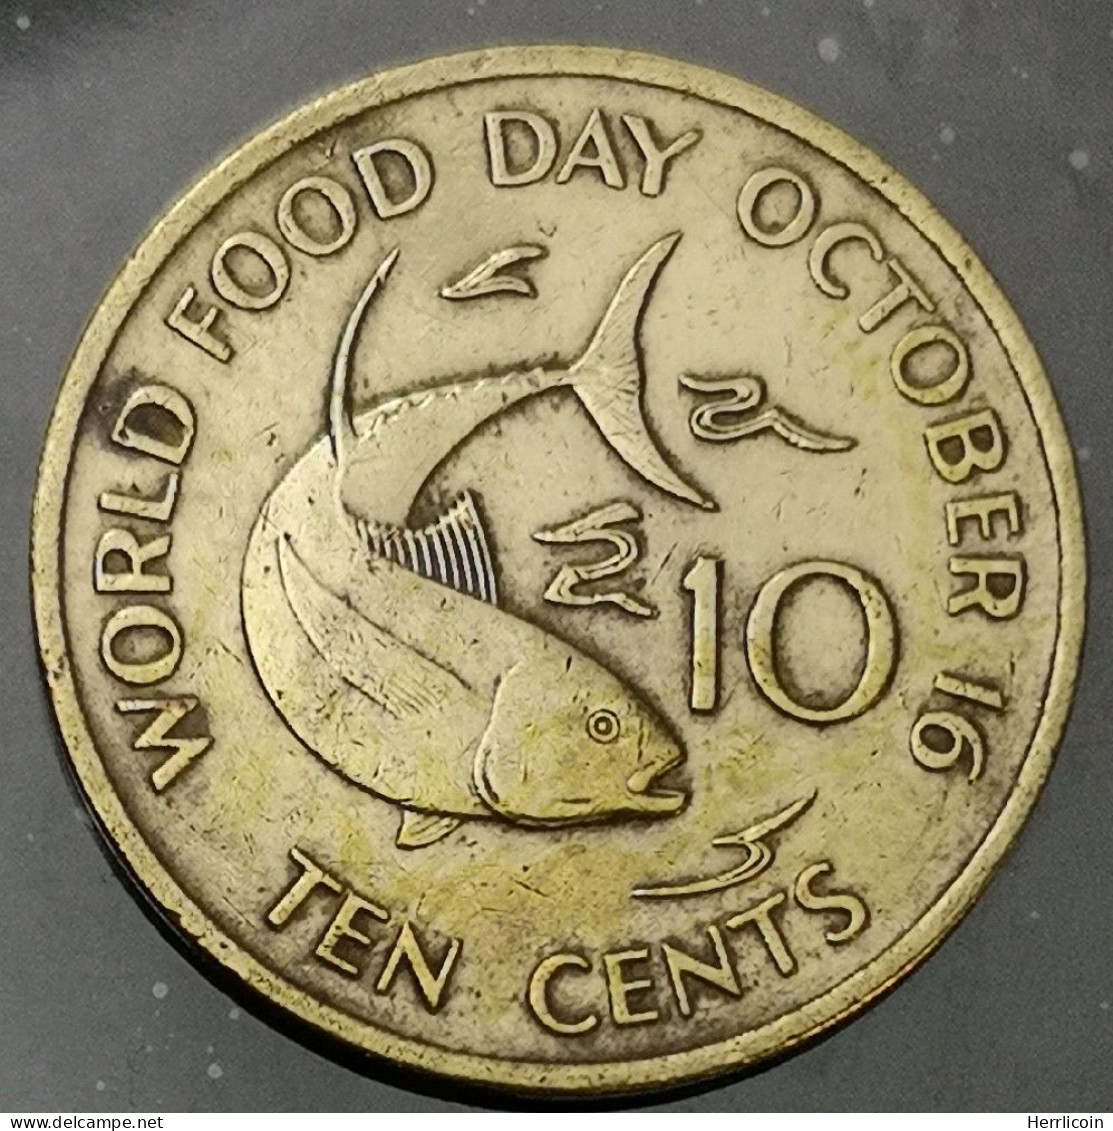 Monnaie Seychelles - 1981 - 10 Cents FAO - Seychellen